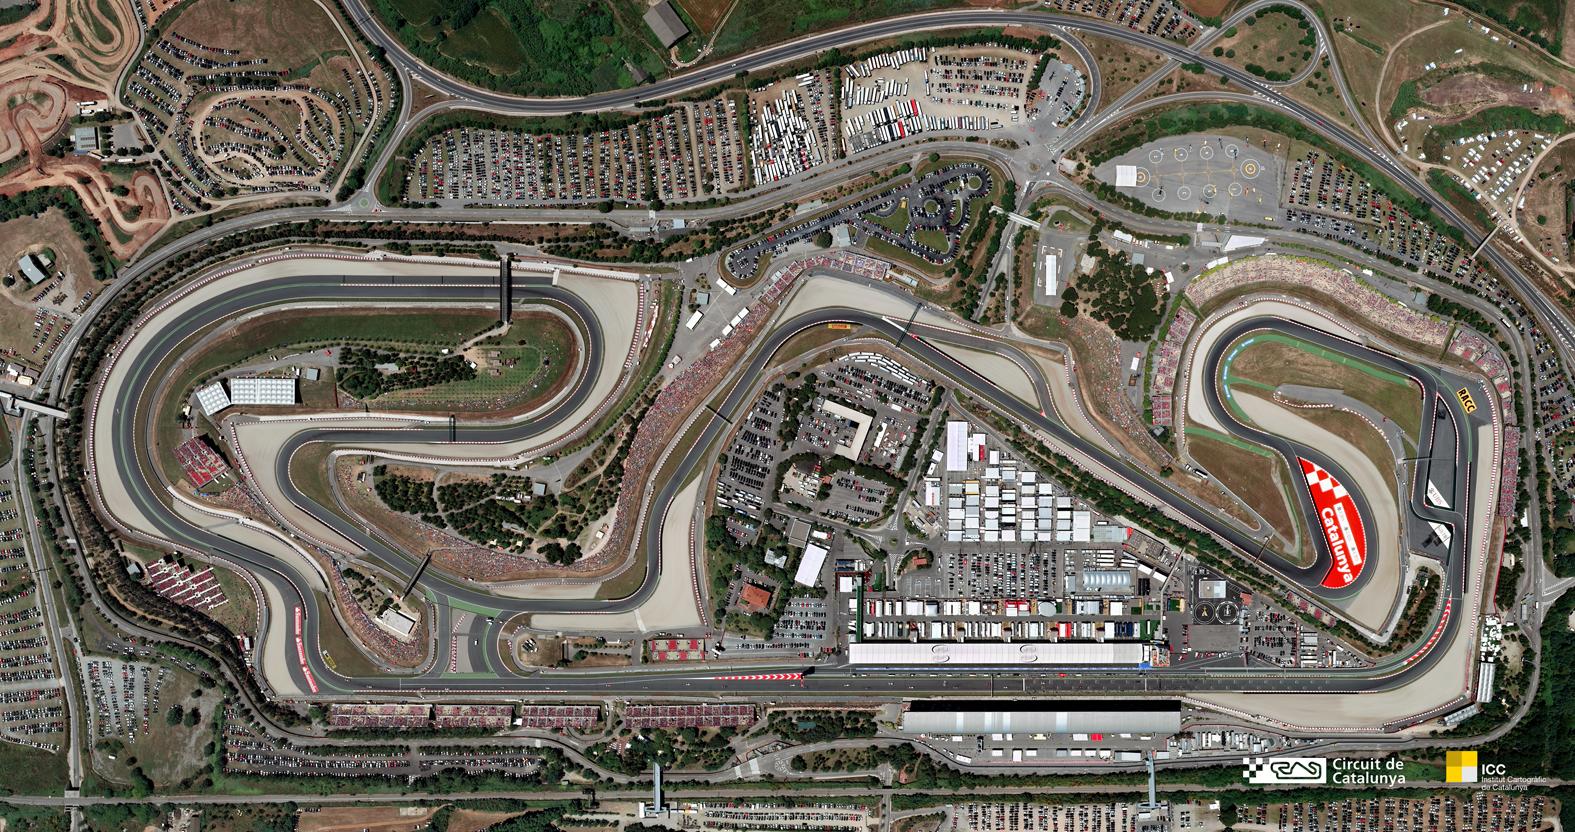 Circuit de Catalunya any 2011